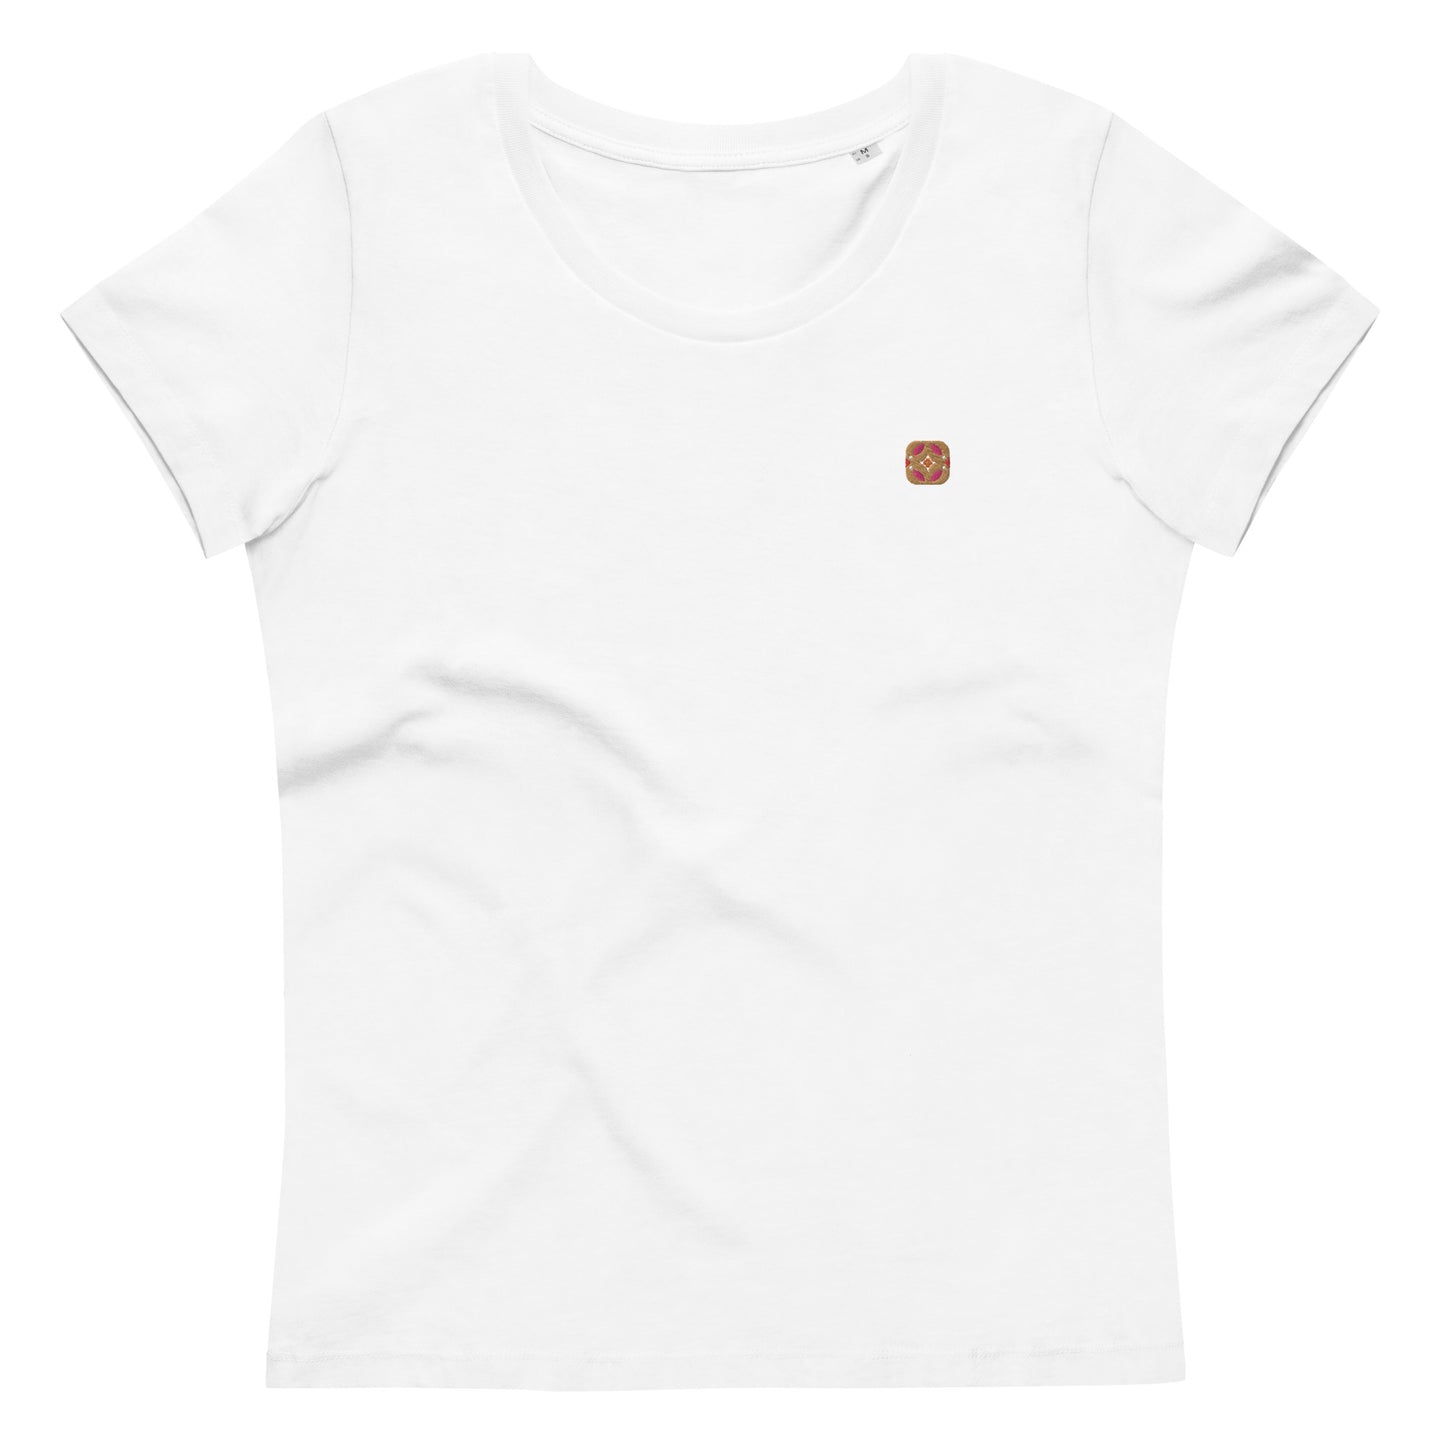 T-shirt blanc oiseaux printaniers brodés style Bauhaus en coton bio - Femme blanc